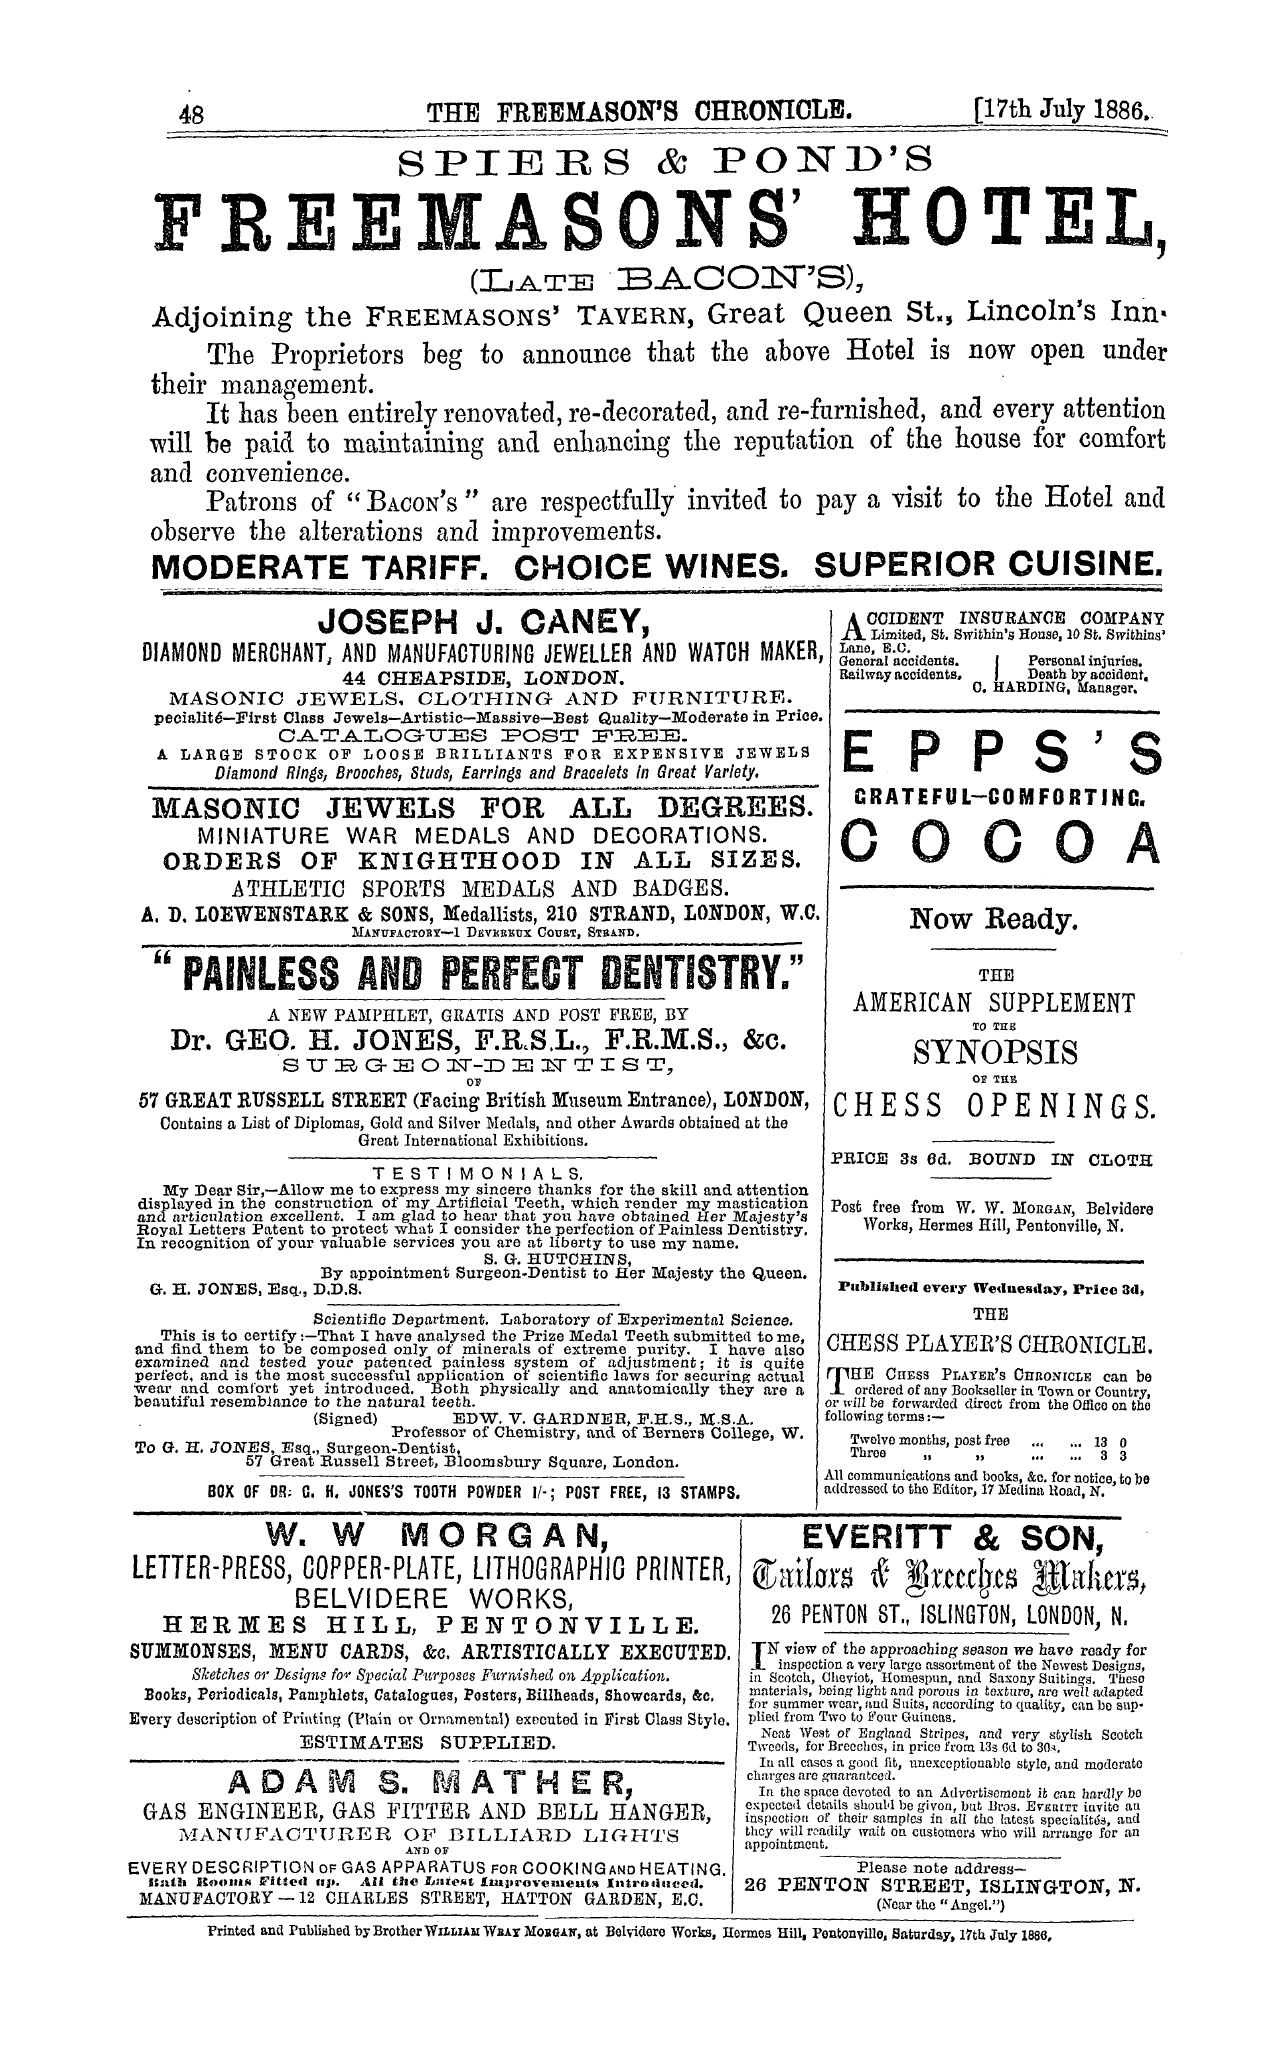 The Freemason's Chronicle: 1886-07-17: 16